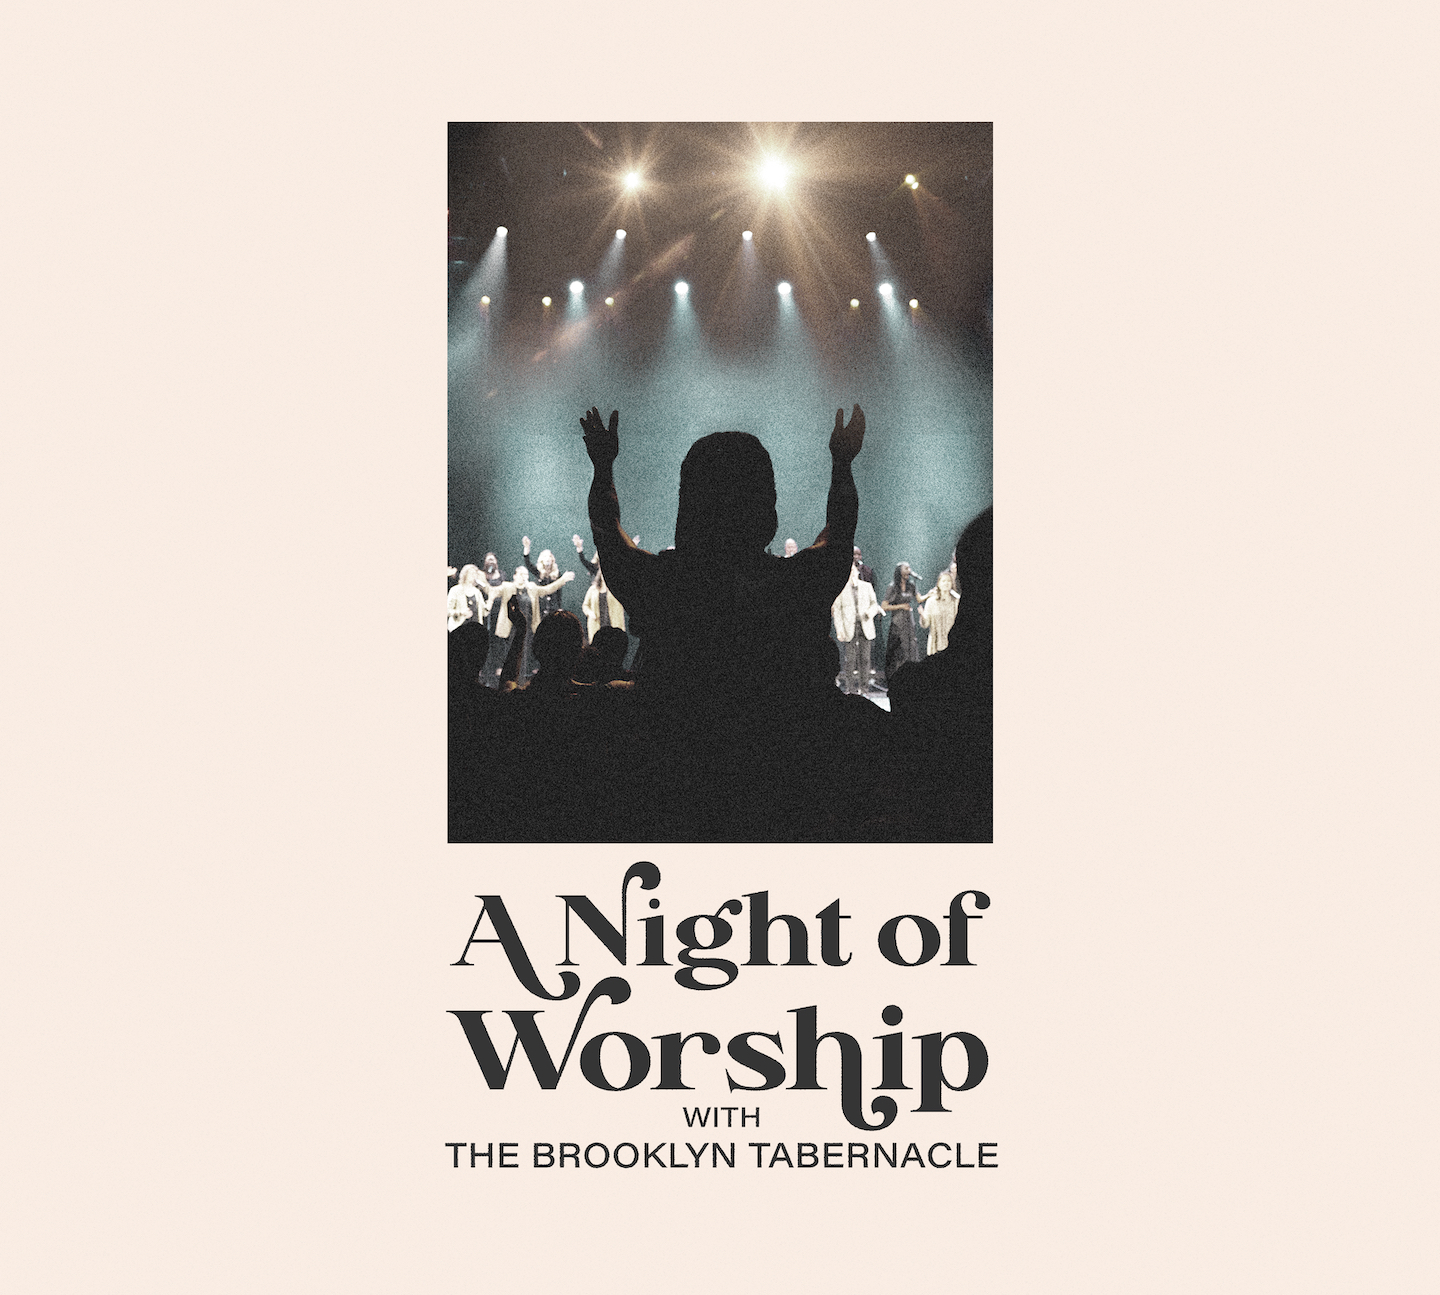 The Brooklyn Tabernacle - A Night of Worship